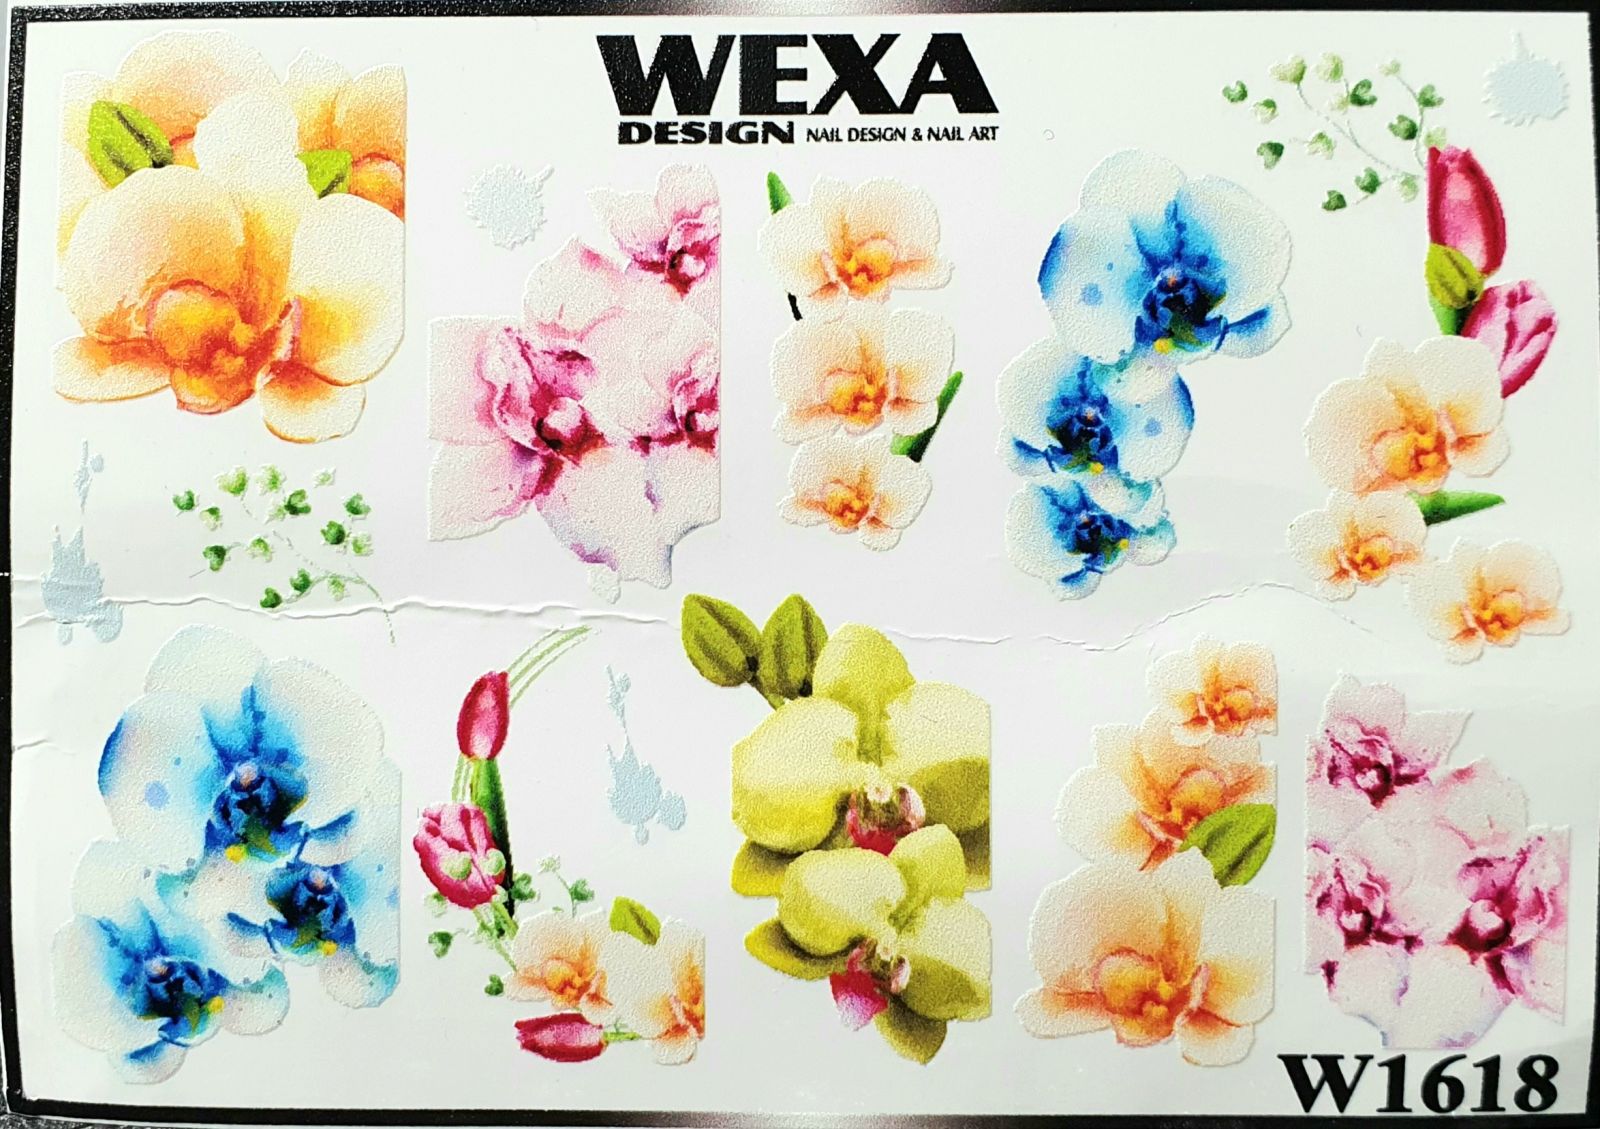 WEXA vodolepky nevyžadujúce bledý podklad W1618 XXL